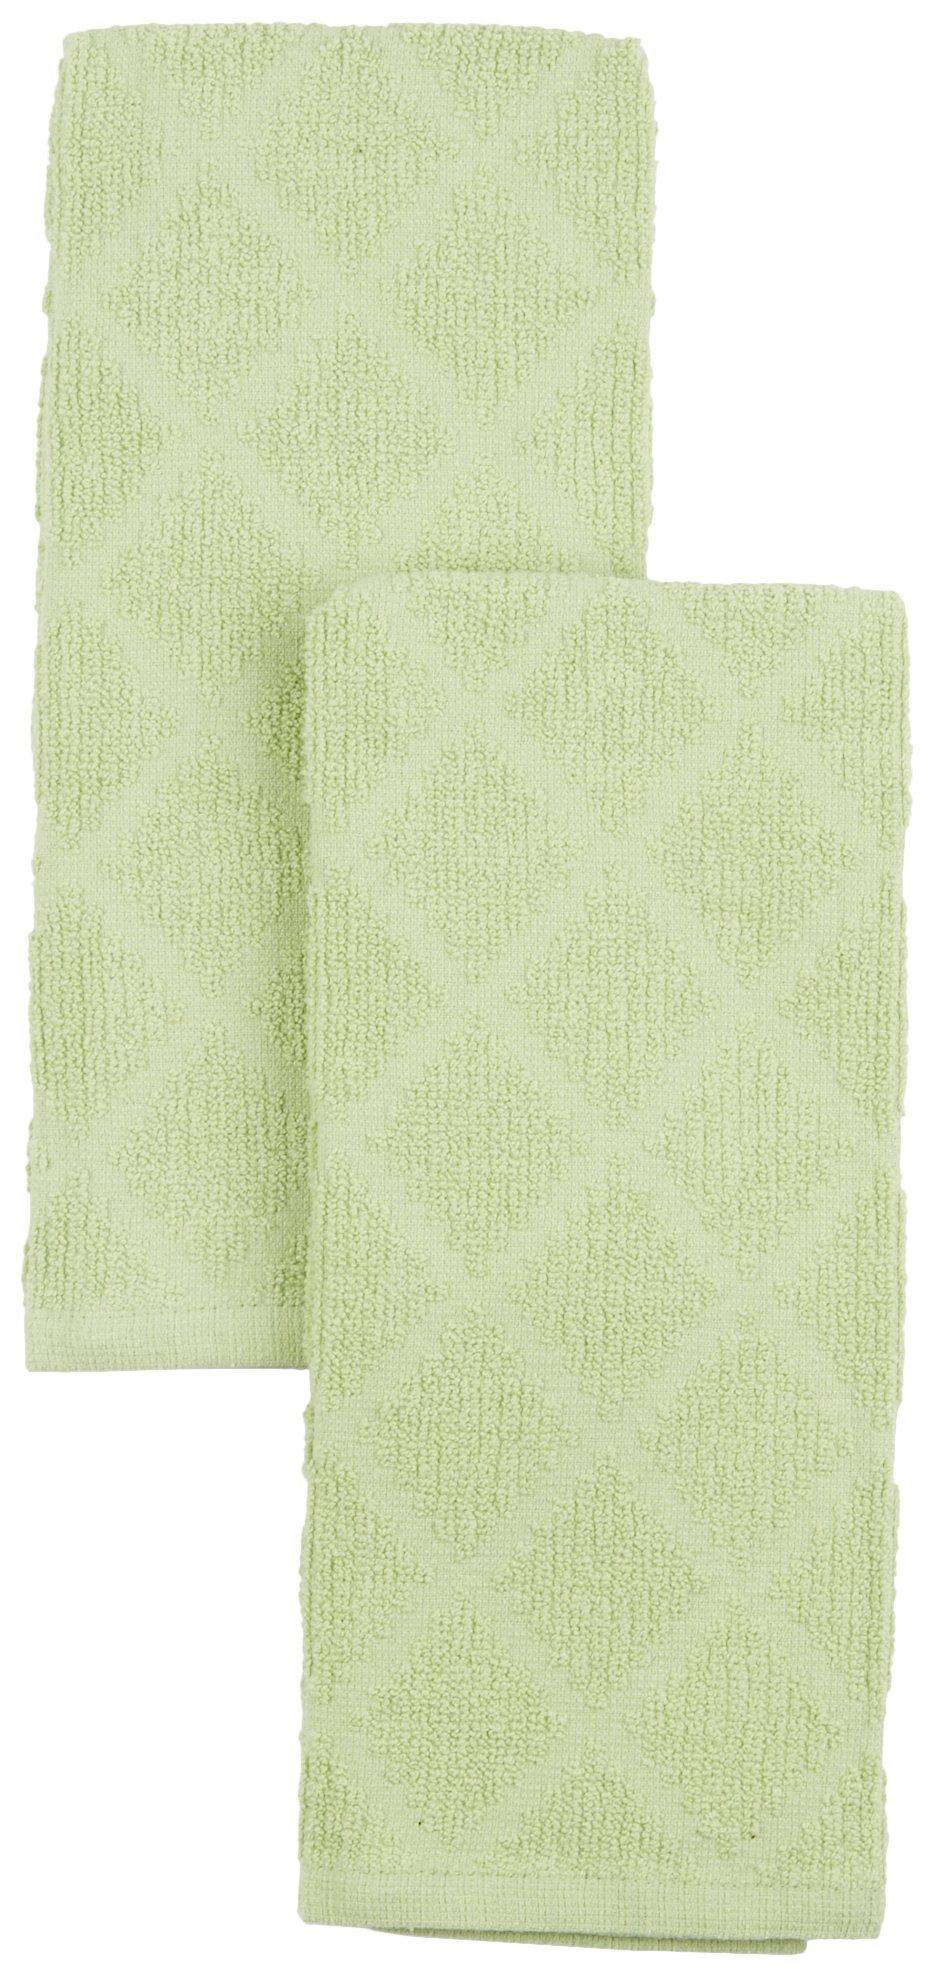 2 Pk 18x28 Diamond Kitchen Towels